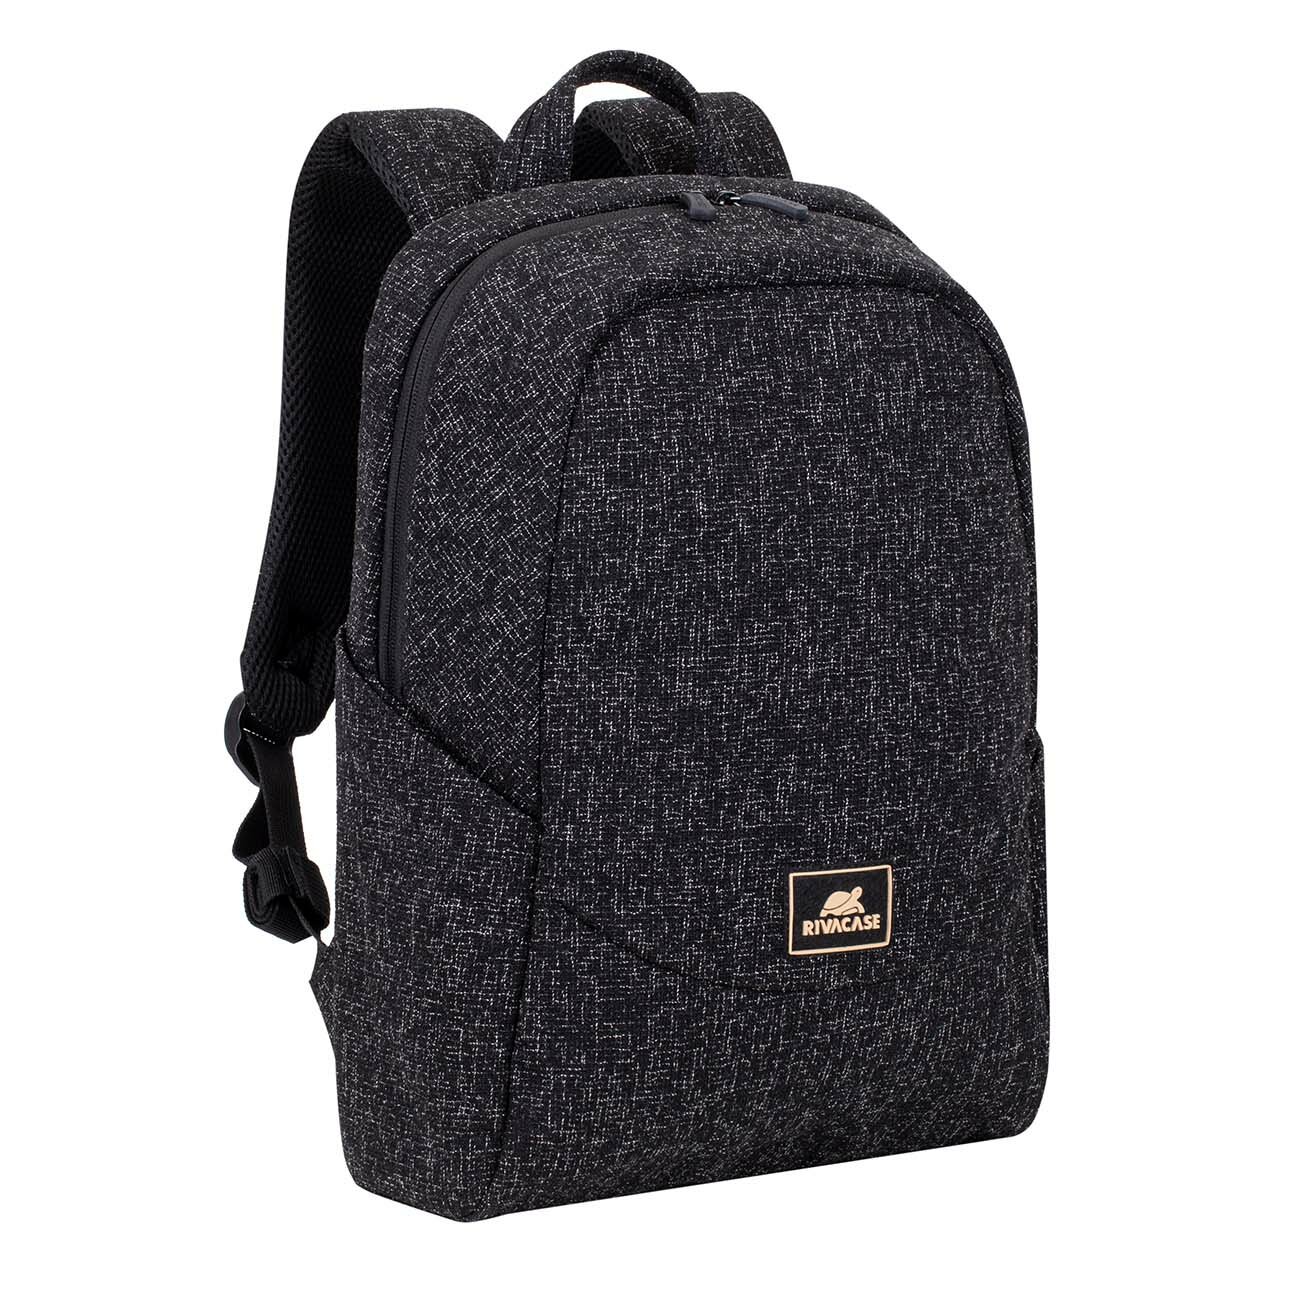 Рюкзак для ноутбука RIVACASE 7923 black